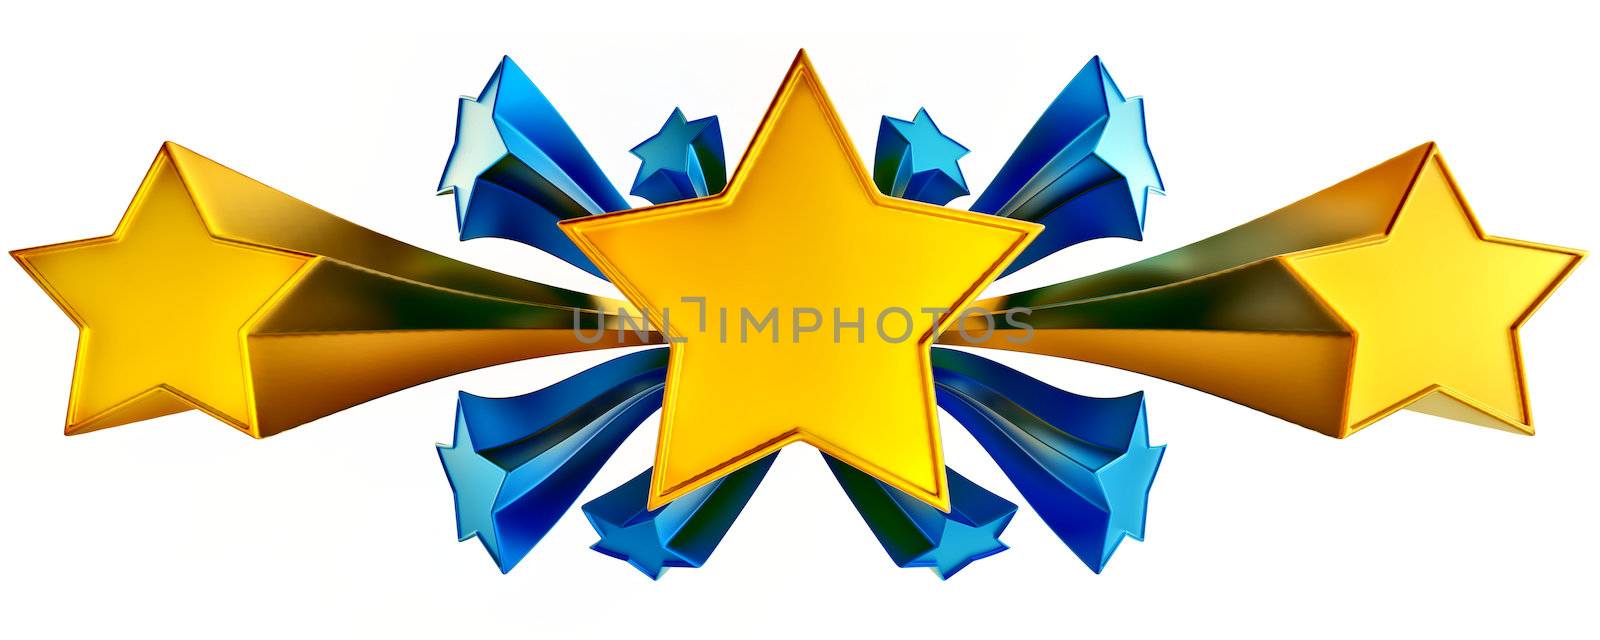 set of eleven shiny gold and blue stars by merzavka